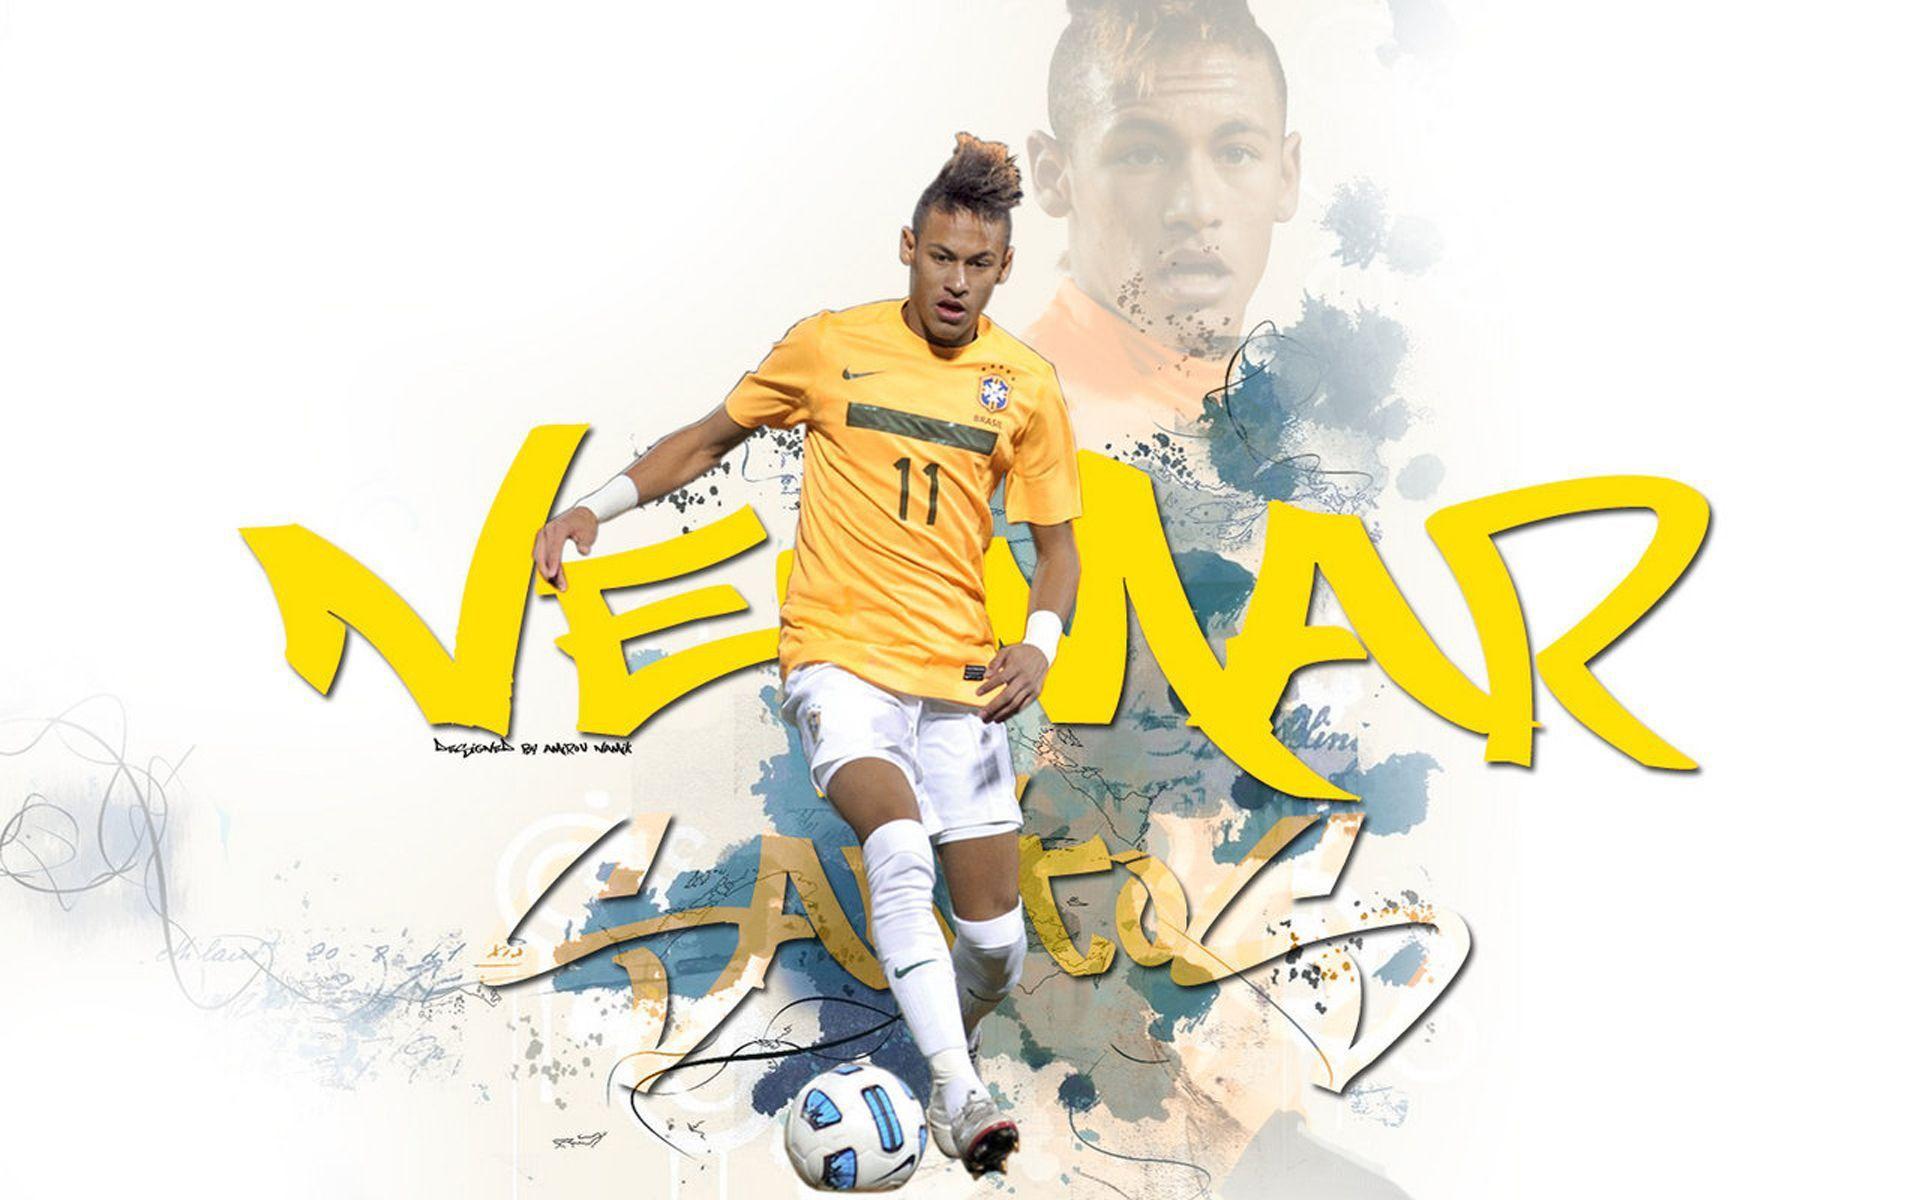 Cool Neymar Wallpaper HD. Wallpaper, Background, Image, Art